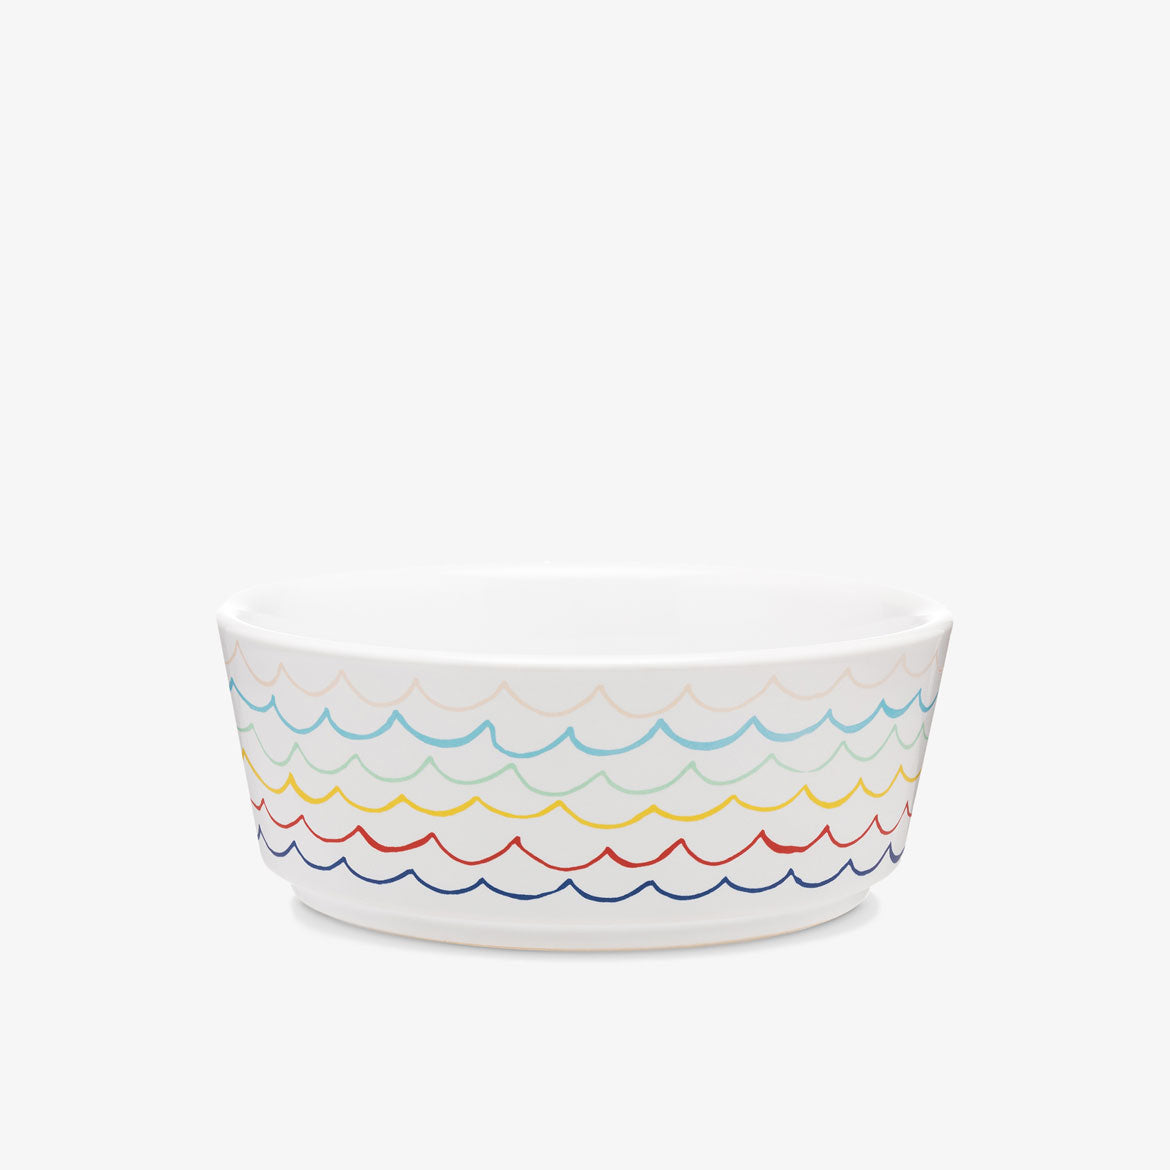 Sketched Wave Ceramic Dog Bowl by Waggo